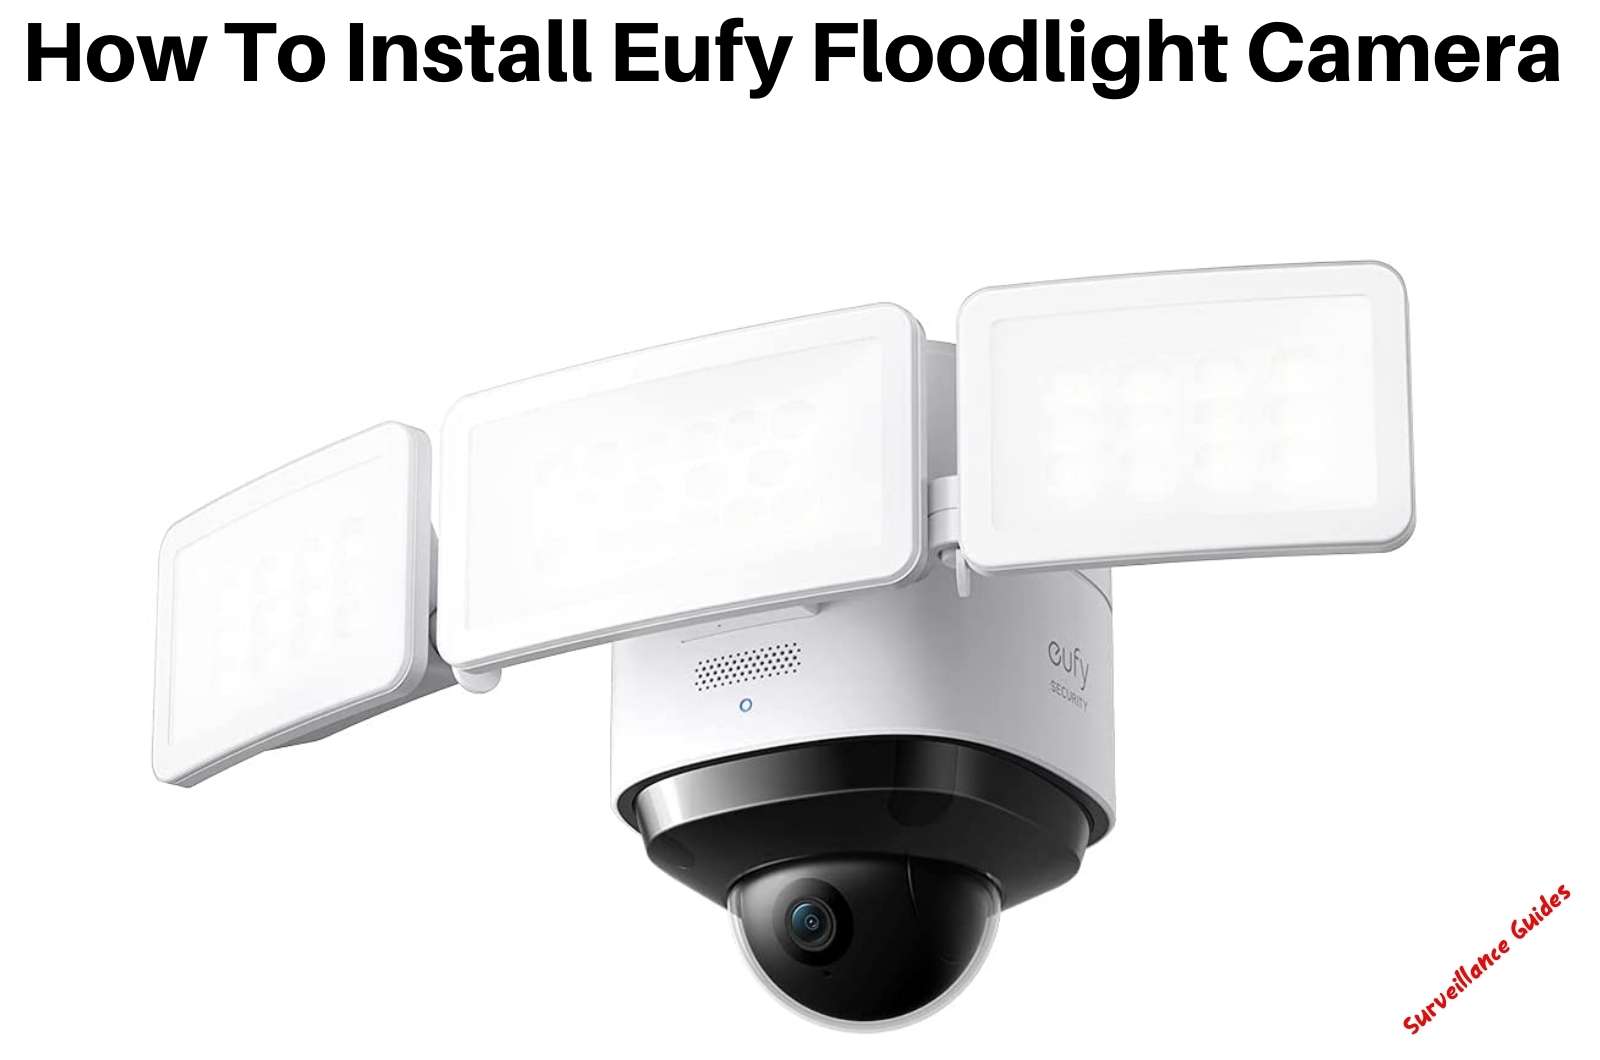 Install Eufy Floodlight Camera